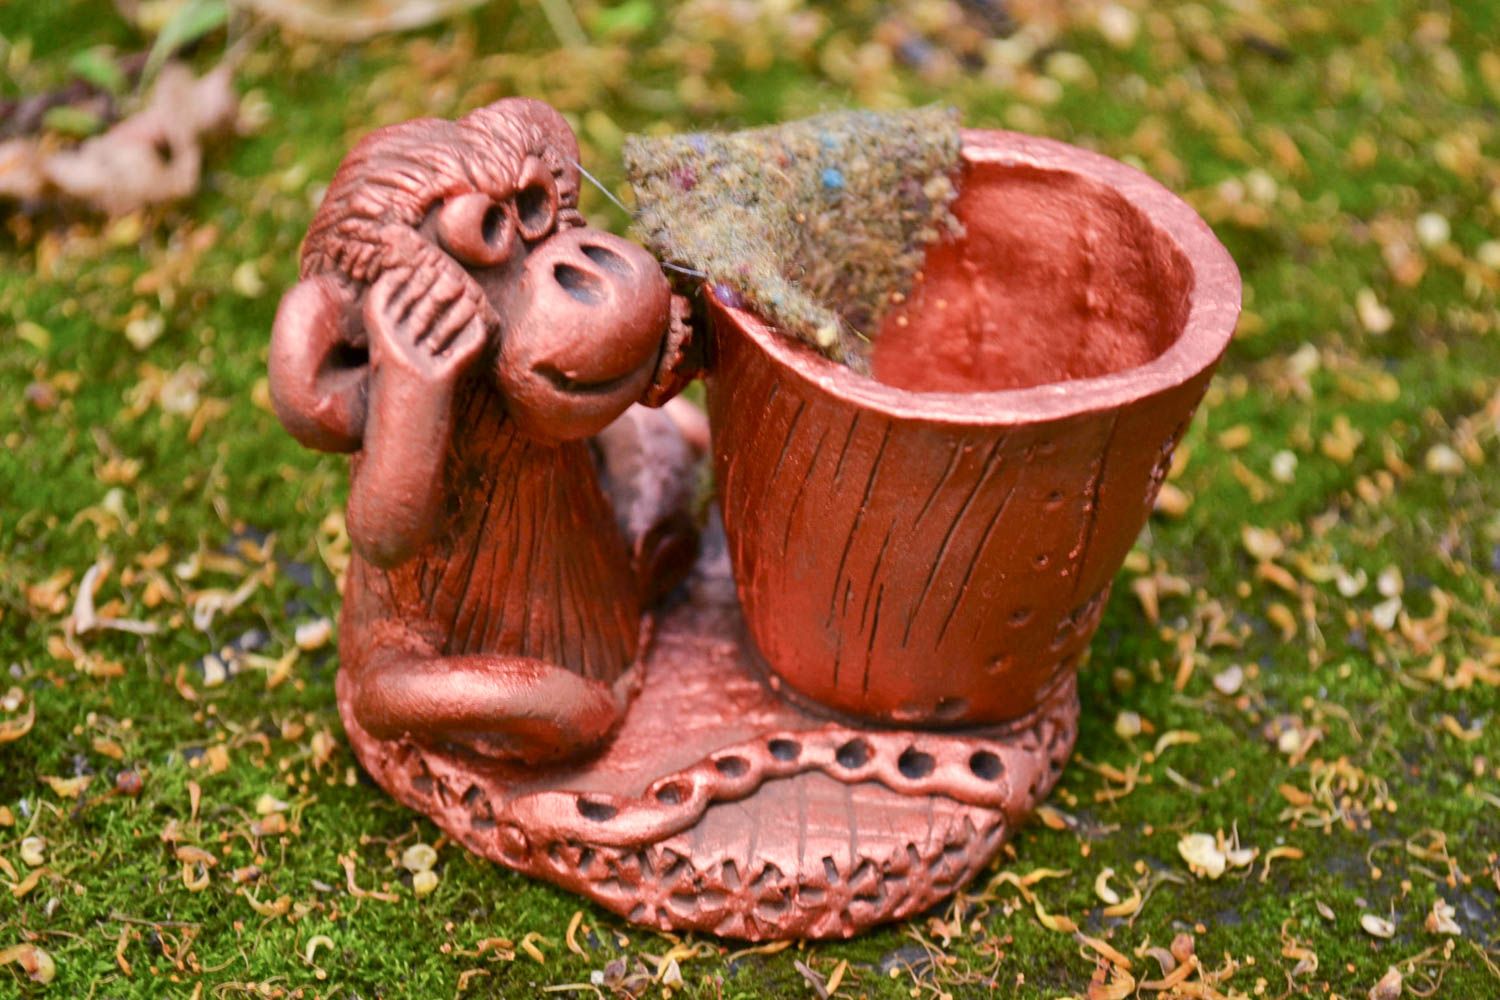 Handmade figurine decorative use only clay statuette unusual gift decor ideas photo 1